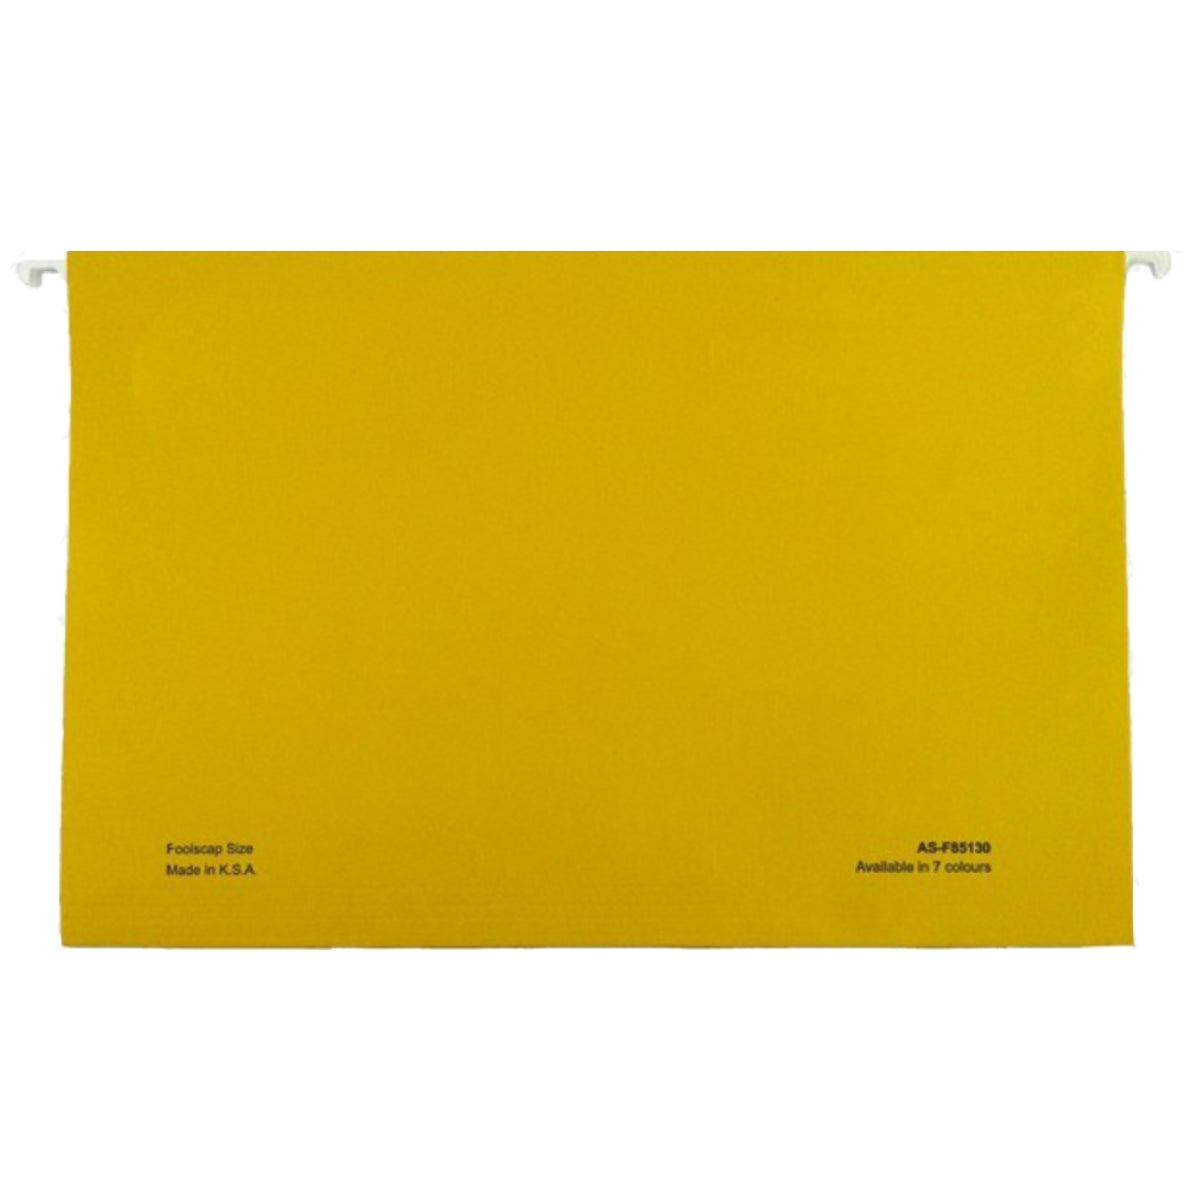 Atlas Suspension/Hanging Files FS, 50/box, Yellow